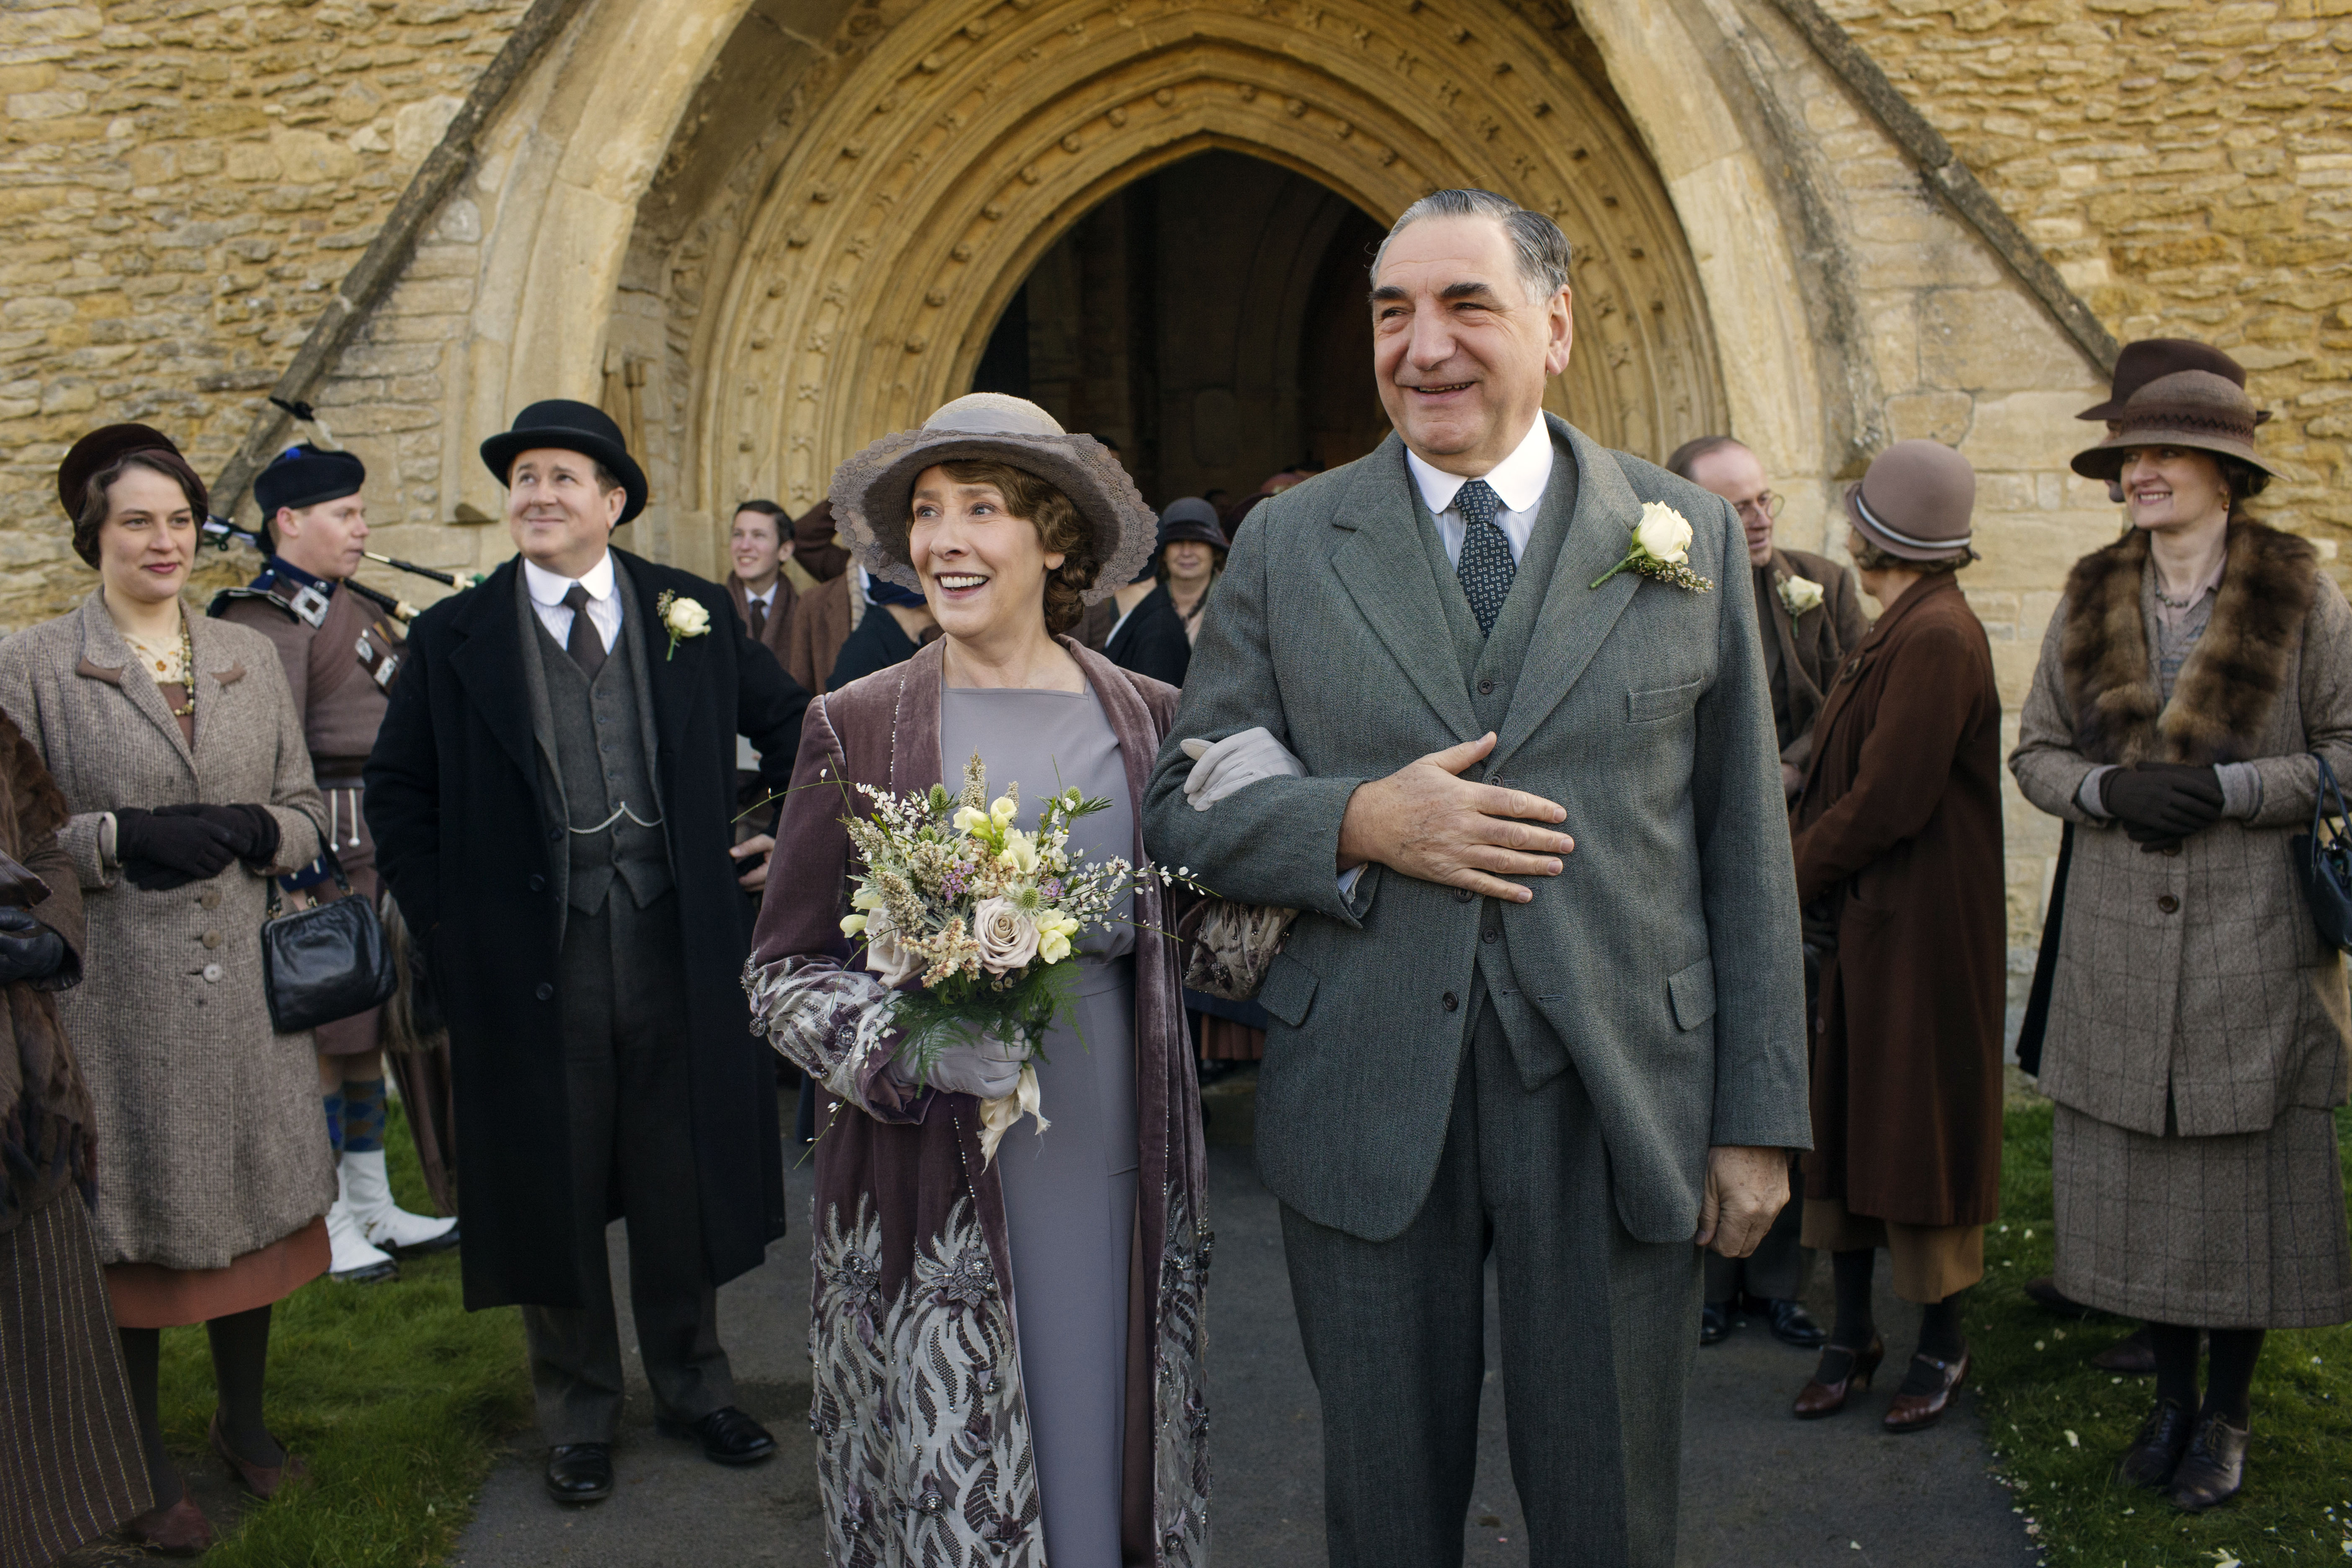 Downton Abbey Season 6 Episode 3 Recap: Mrs. Hughes Blindsided, Branson's Back and Ooh ...